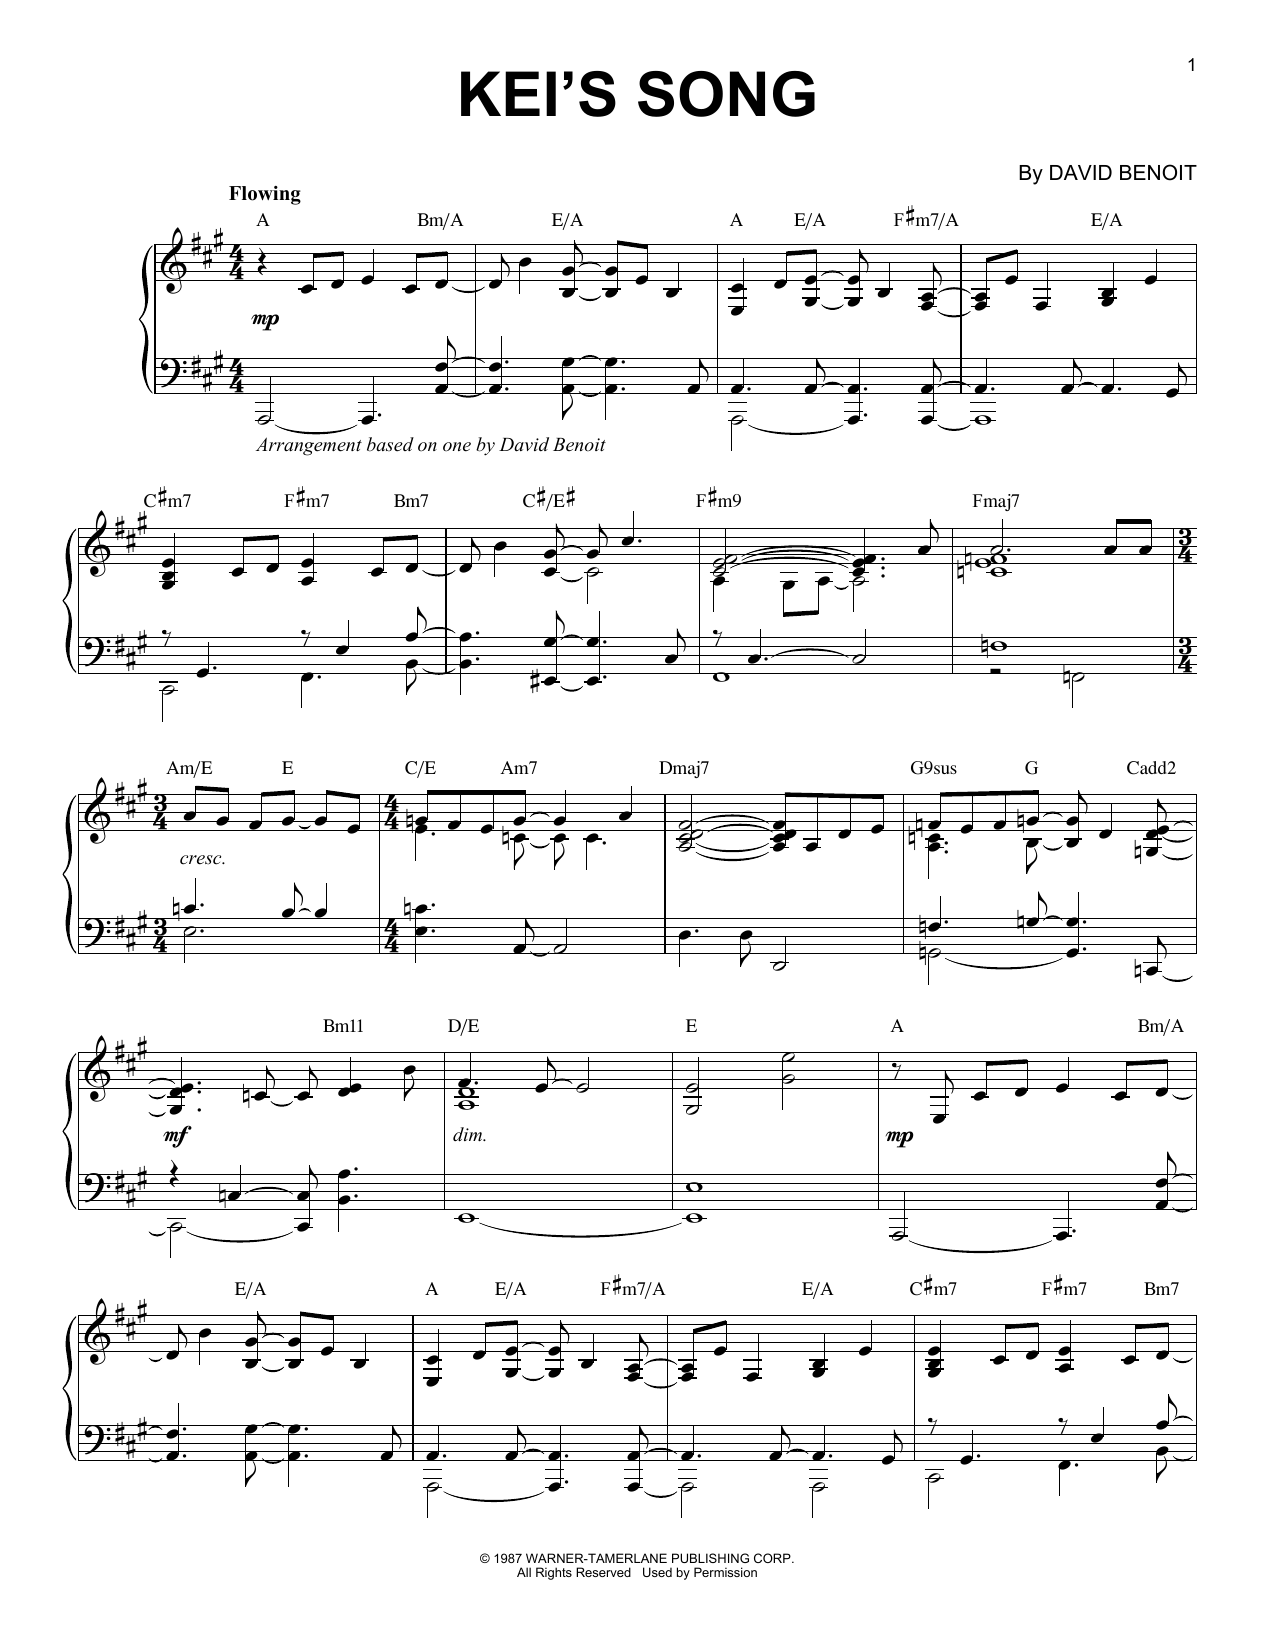 David Benoit Kei's Song Sheet Music Notes & Chords for Piano - Download or Print PDF